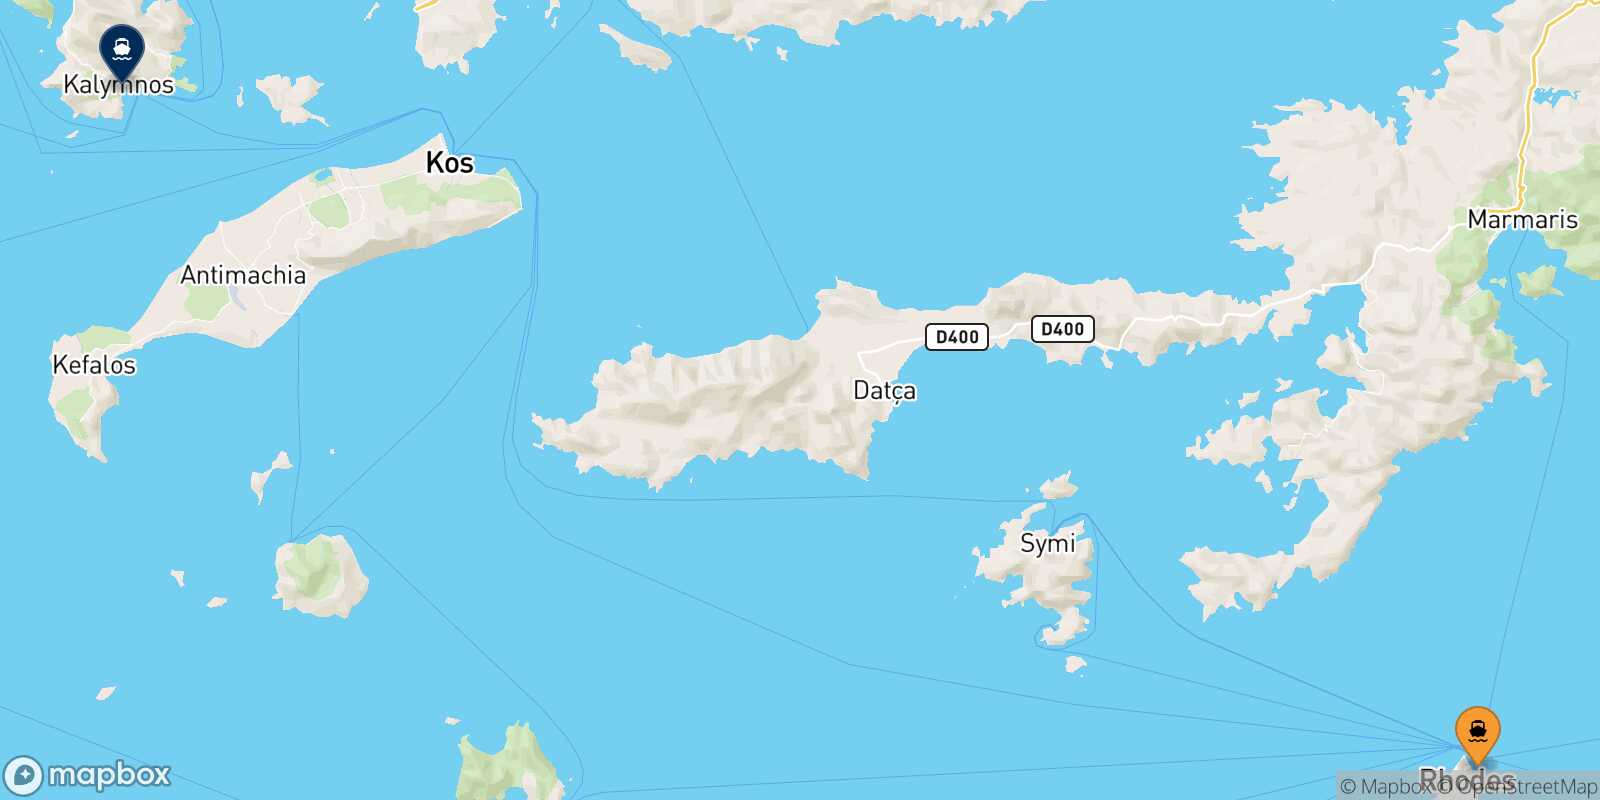 Mappa della rotta Rodi Kalymnos